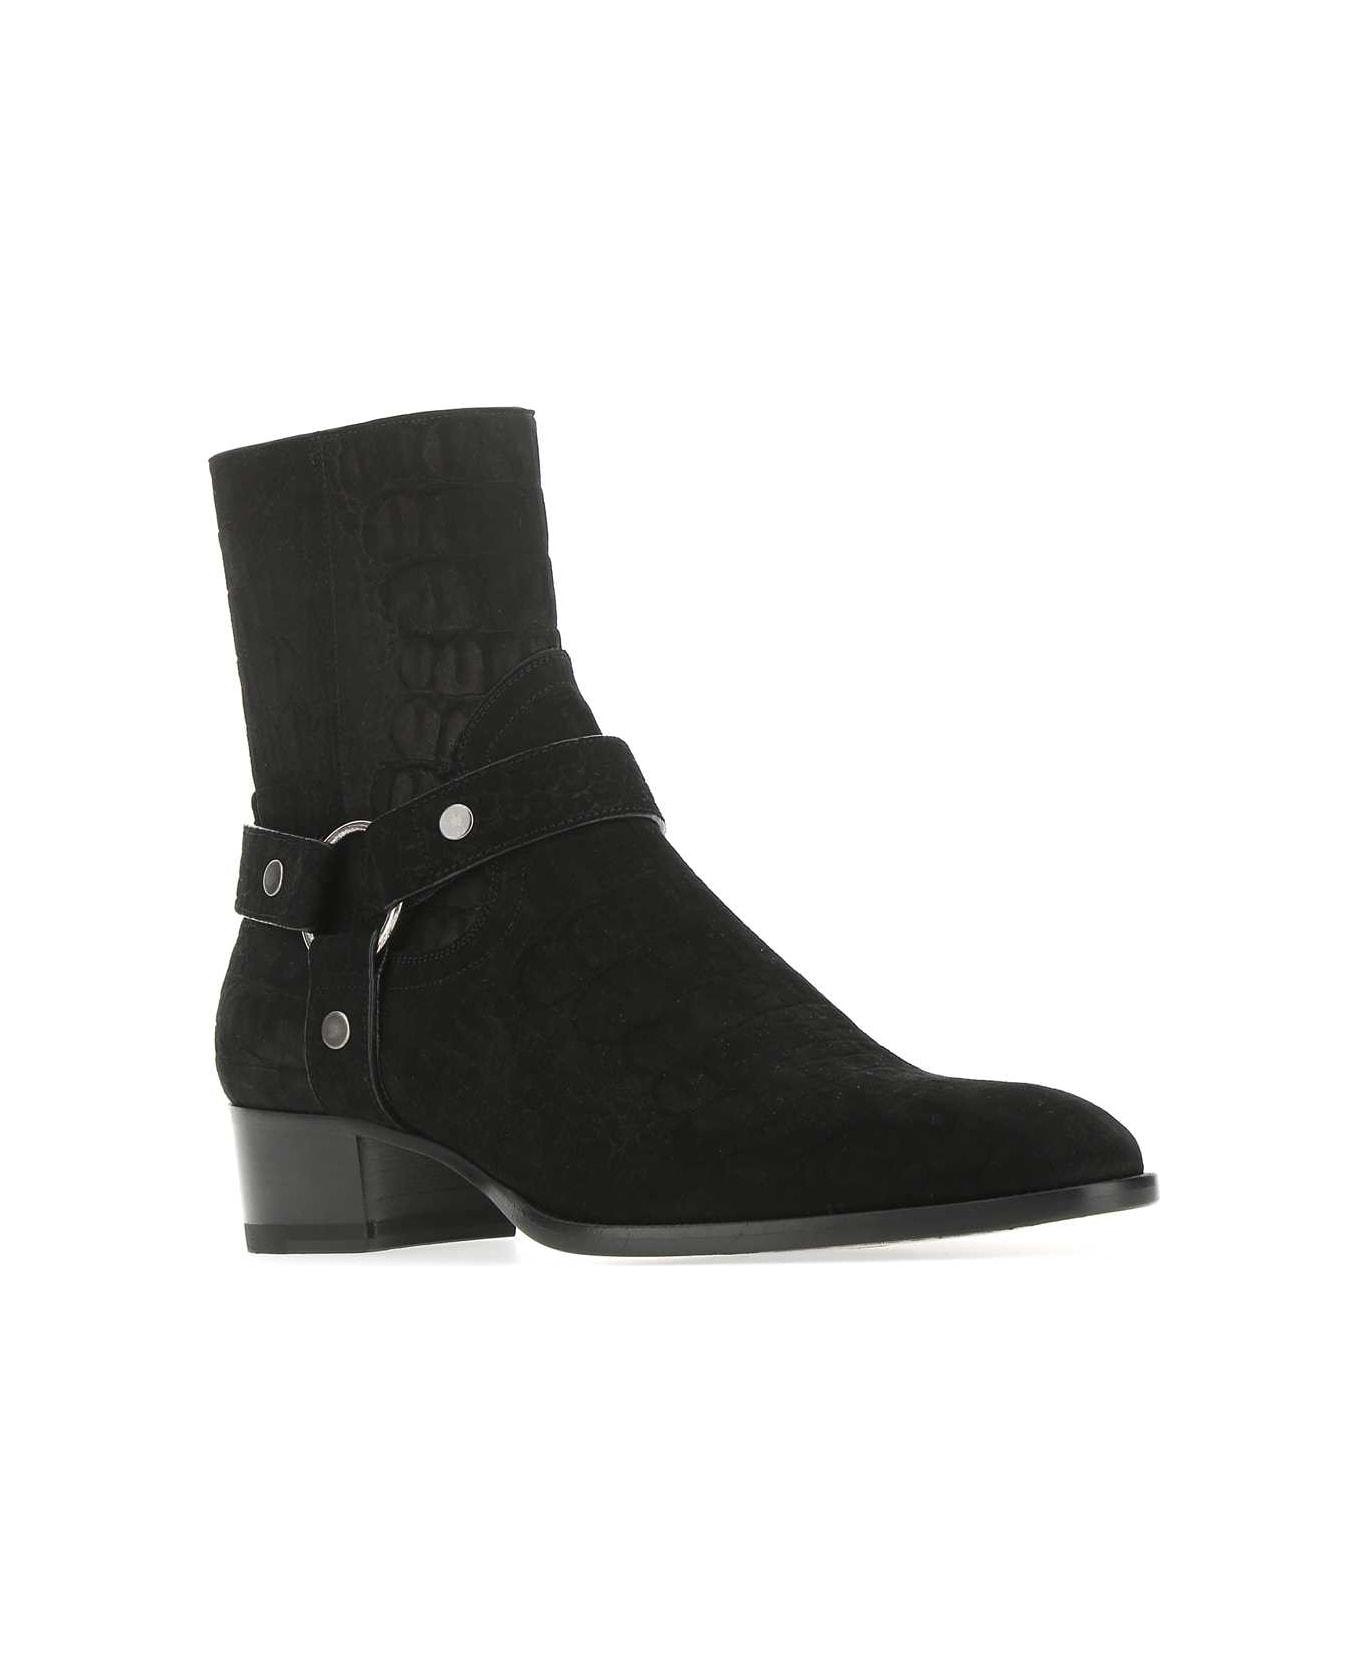 Saint Laurent Black Suede Boots - NERO